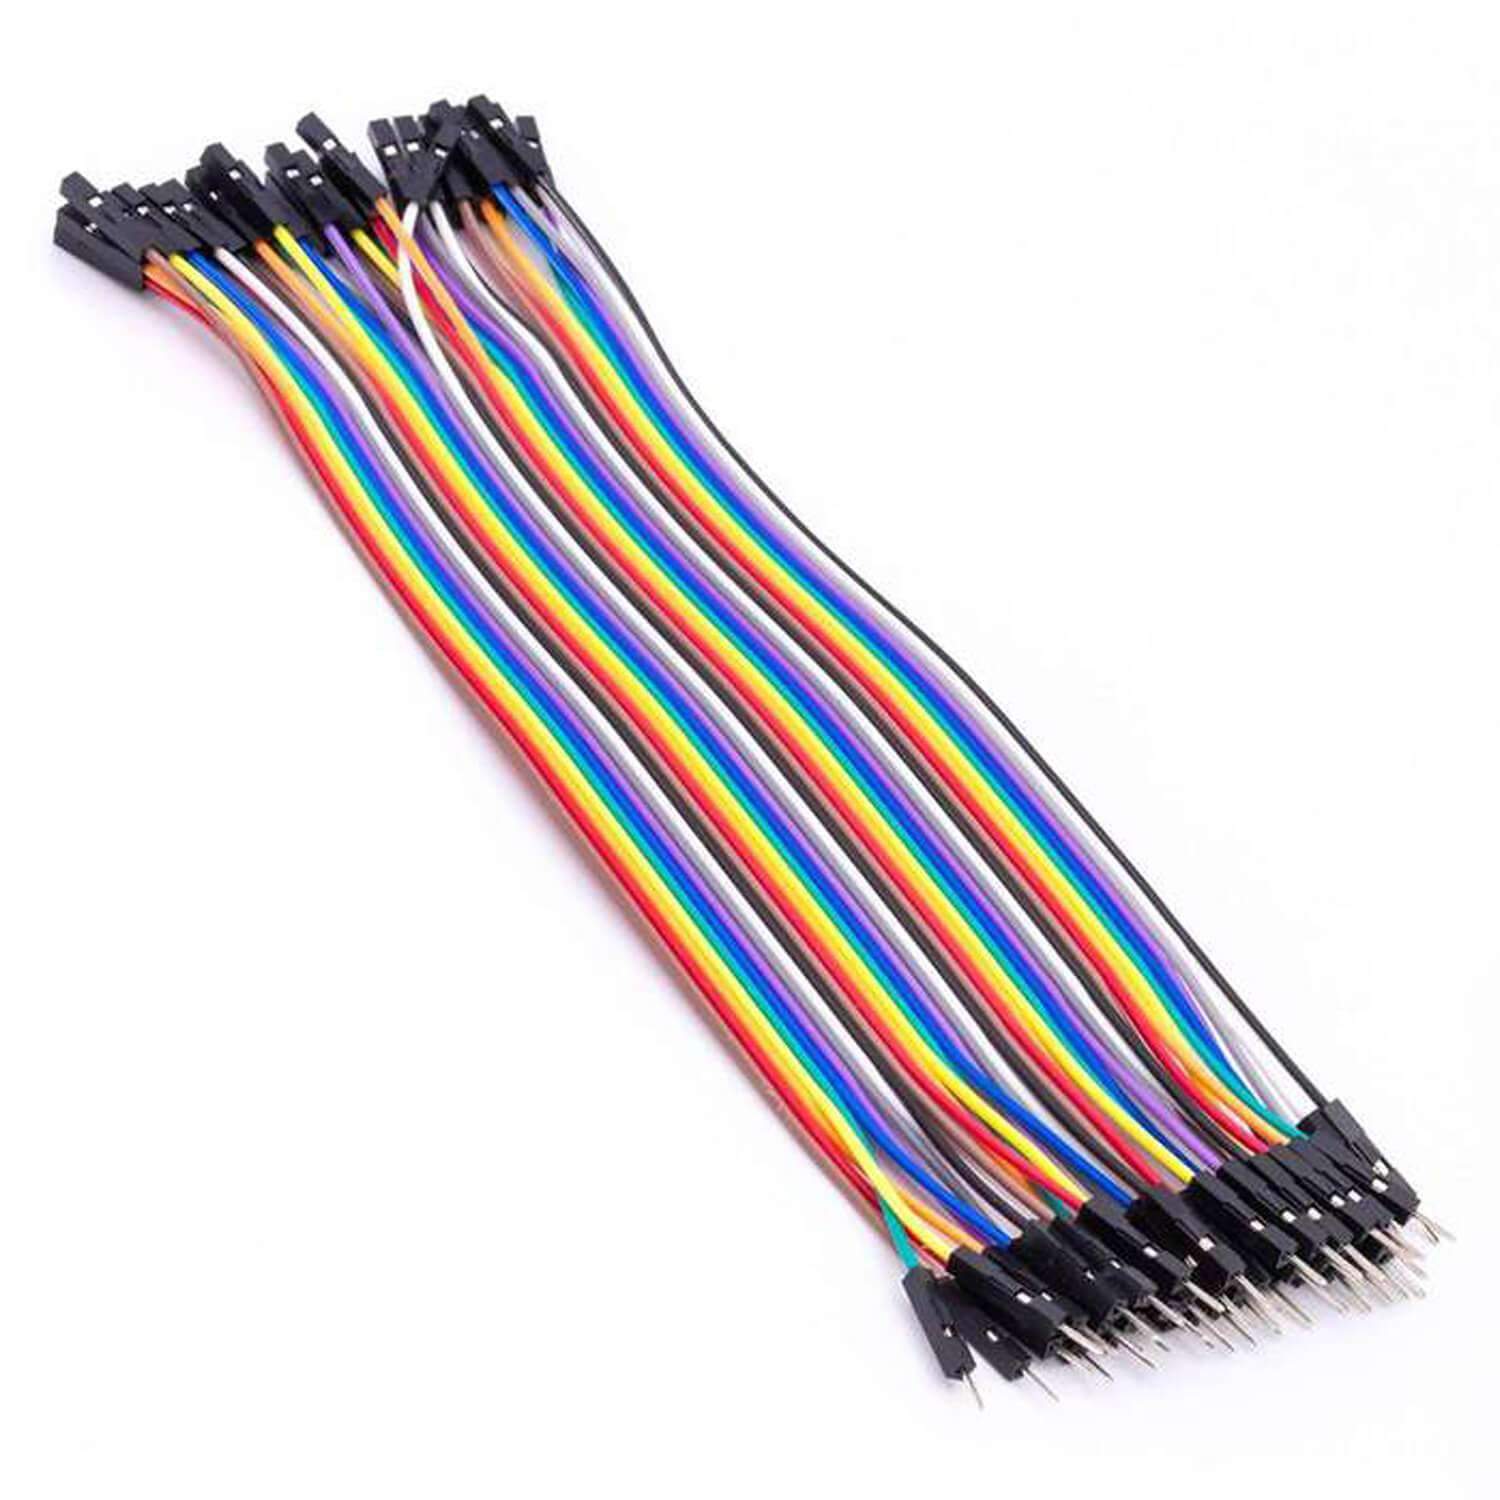 https://cdn.shopify.com/s/files/1/1509/1638/products/jumper-wire-kabel-40-stk-je-20-cm-f2m-female-to-male-kompatibel-mit-arduino-und-raspberry-pi-breadboard-690507.jpg?v=1679398749